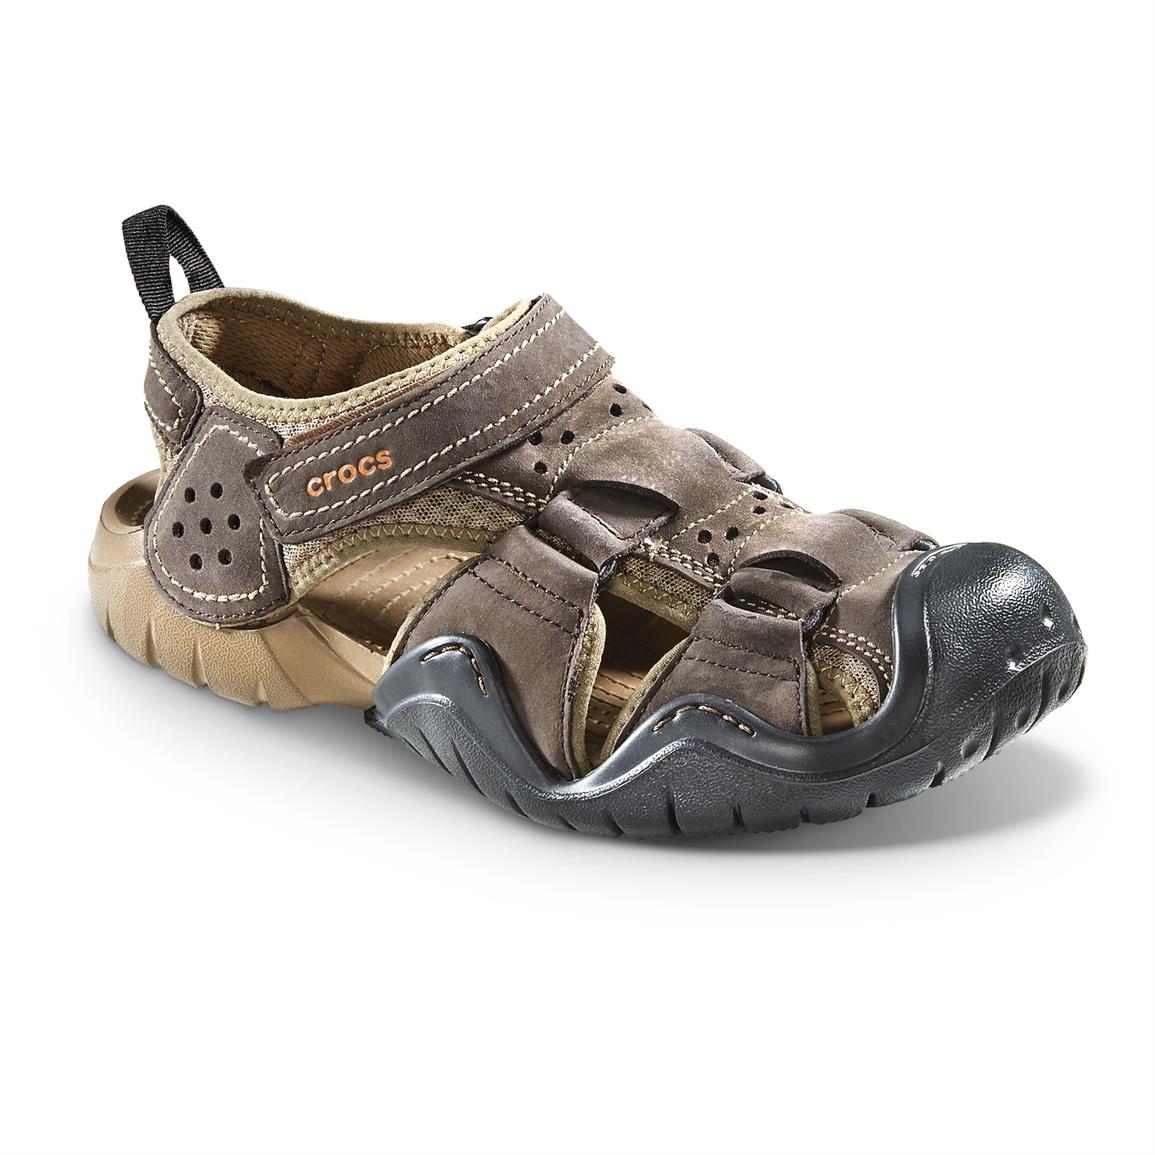 Men's Crocs SWIFTWATER Leather Fisherman Espresso Walnut Rugged Sandals Shoes 